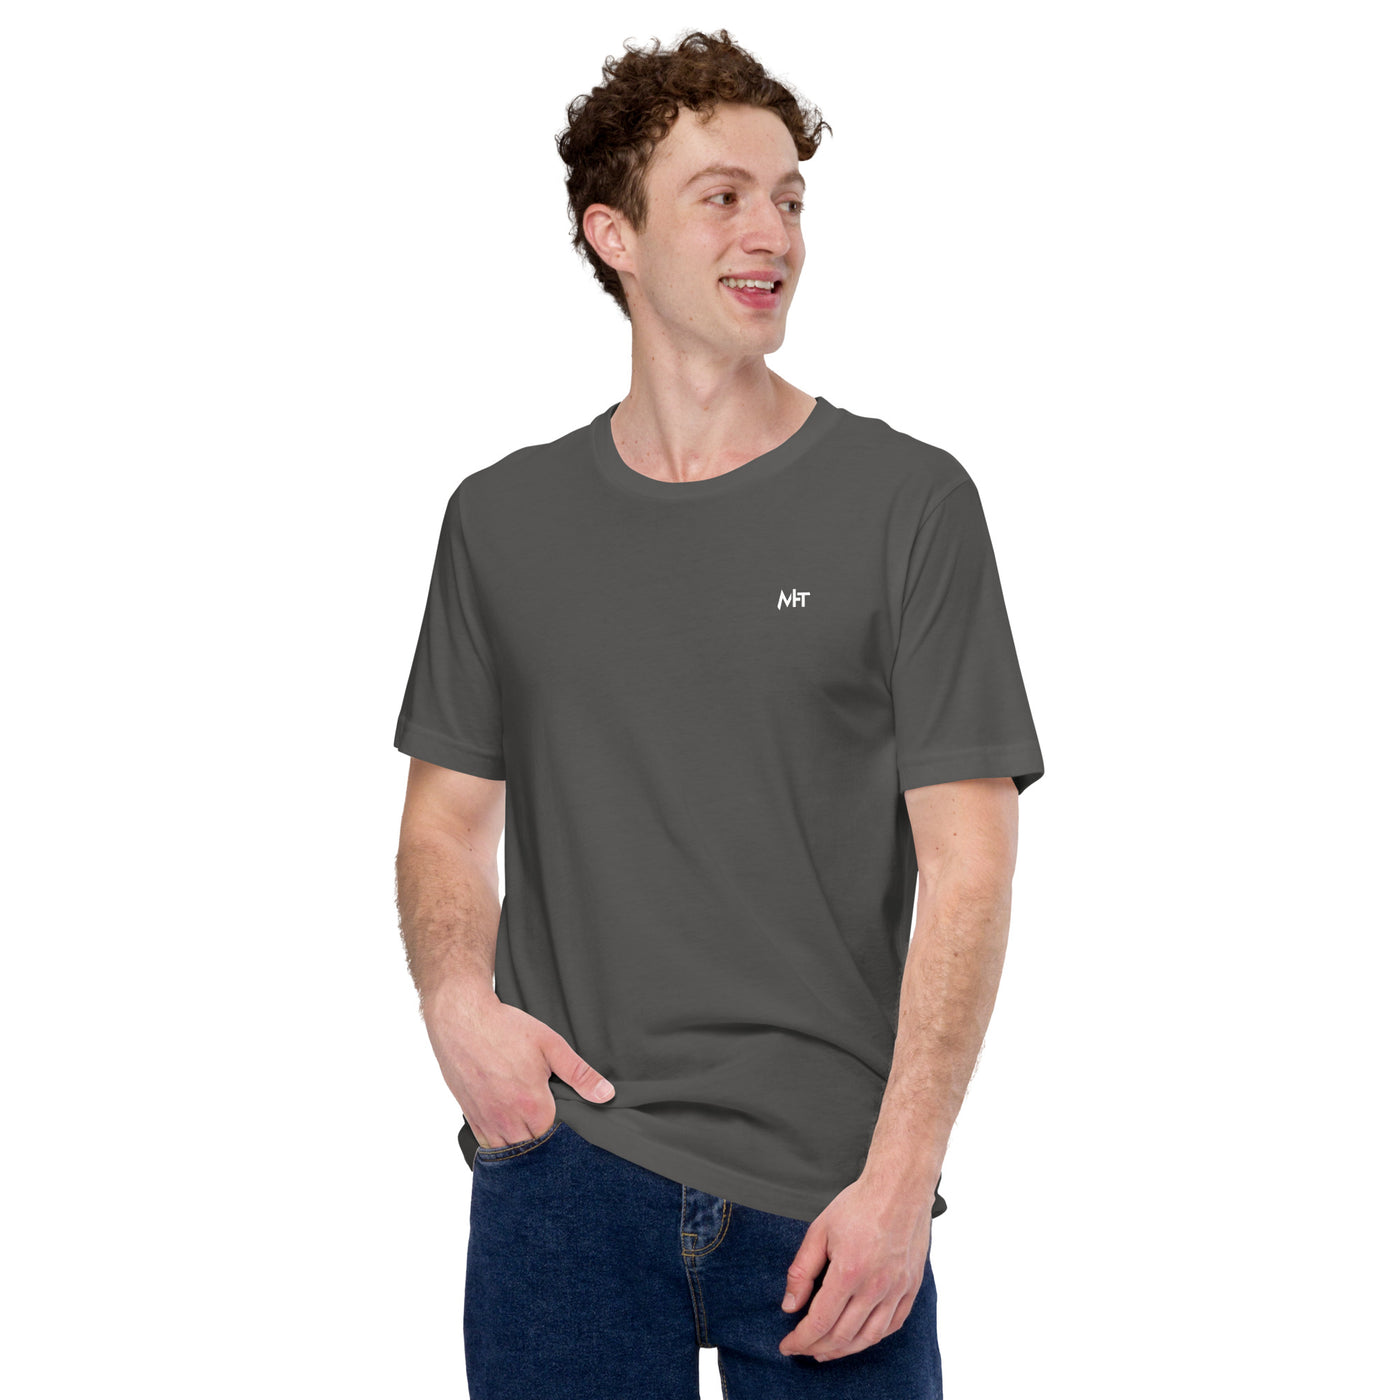 Don’t Worry! I am a Professional Senior Software Developer - Unisex t-shirt ( Back Print )